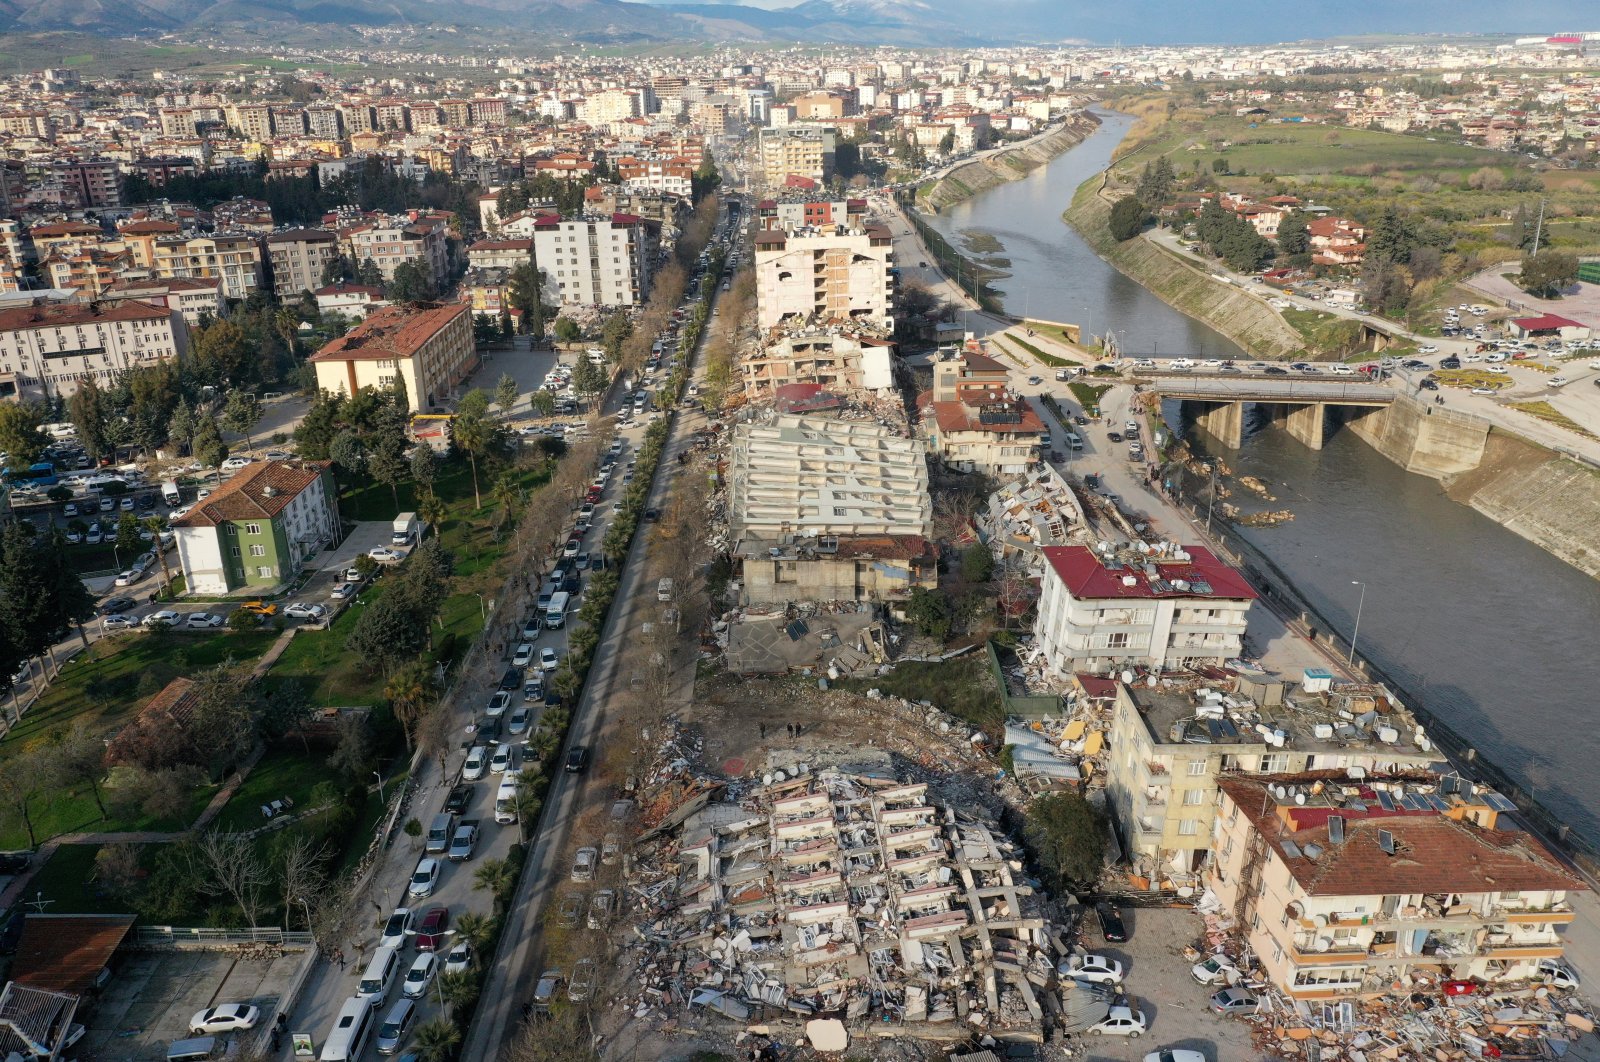 Magnitudo 6.4, 5.8 gempa mengguncang Hatay Türkiye